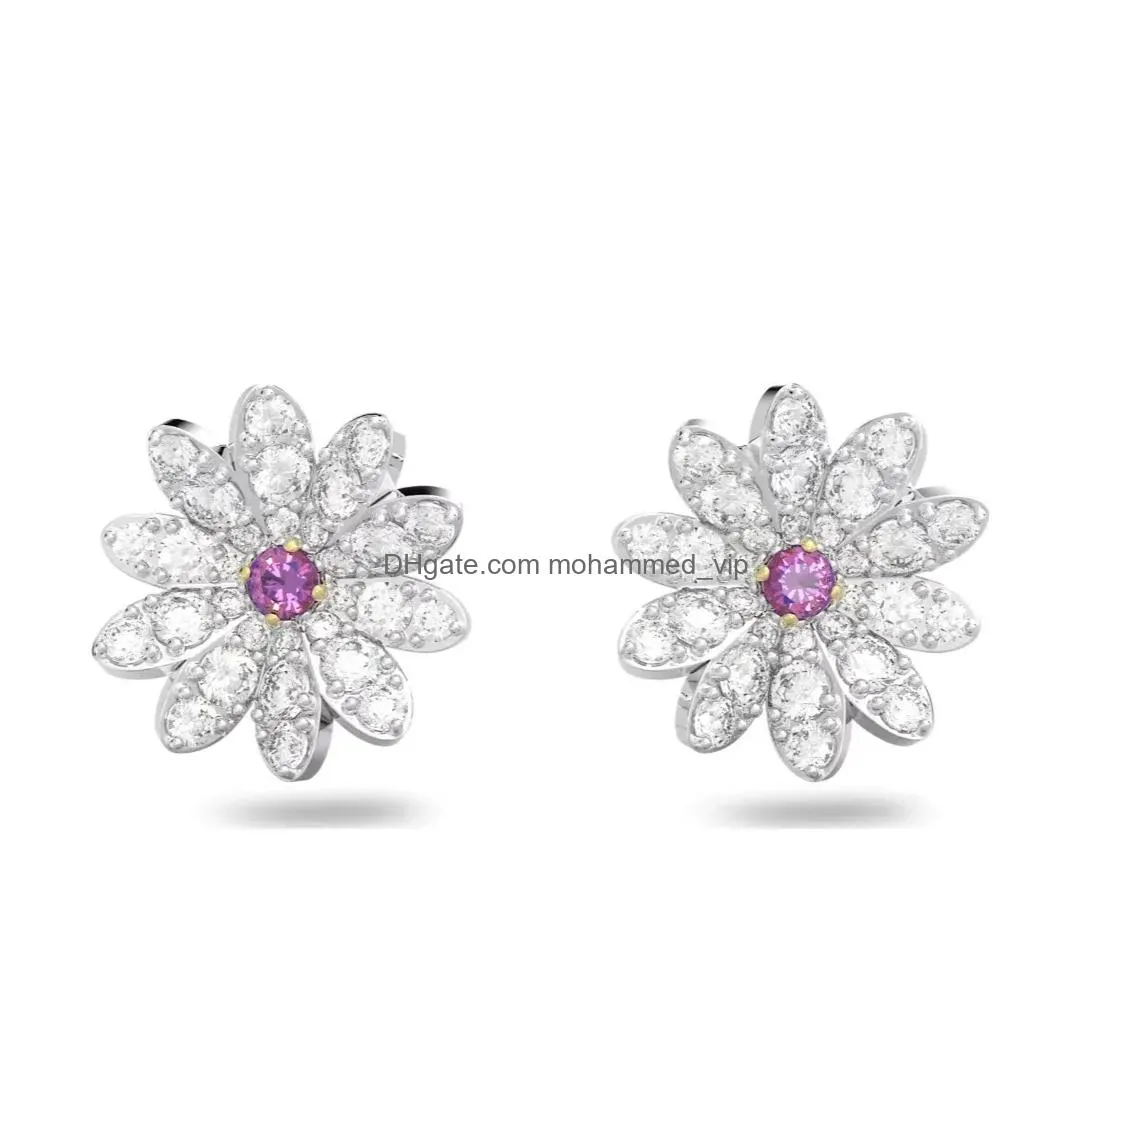 necklace xfu fashion fine jewelry sets high quality flower daisy bowknot jewellery bracelet earrings necklace ring for women